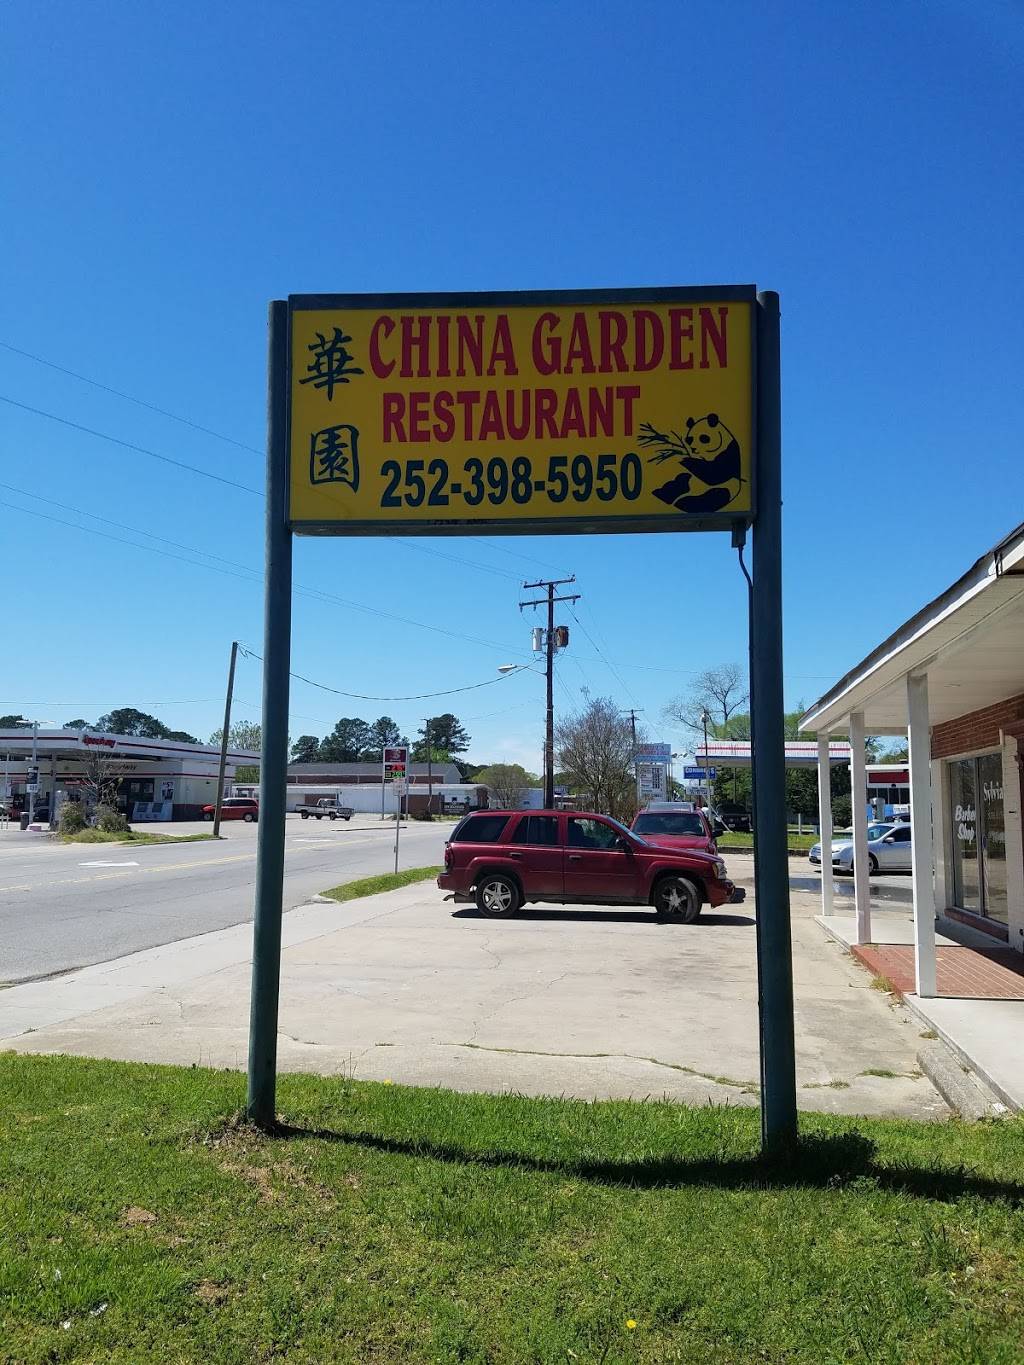 7501bc2e9faa610cacdbbbbcf9d21aee  United States North Carolina Hertford County Murfreesboro China Garden Restaurant 252 398 5950htm 